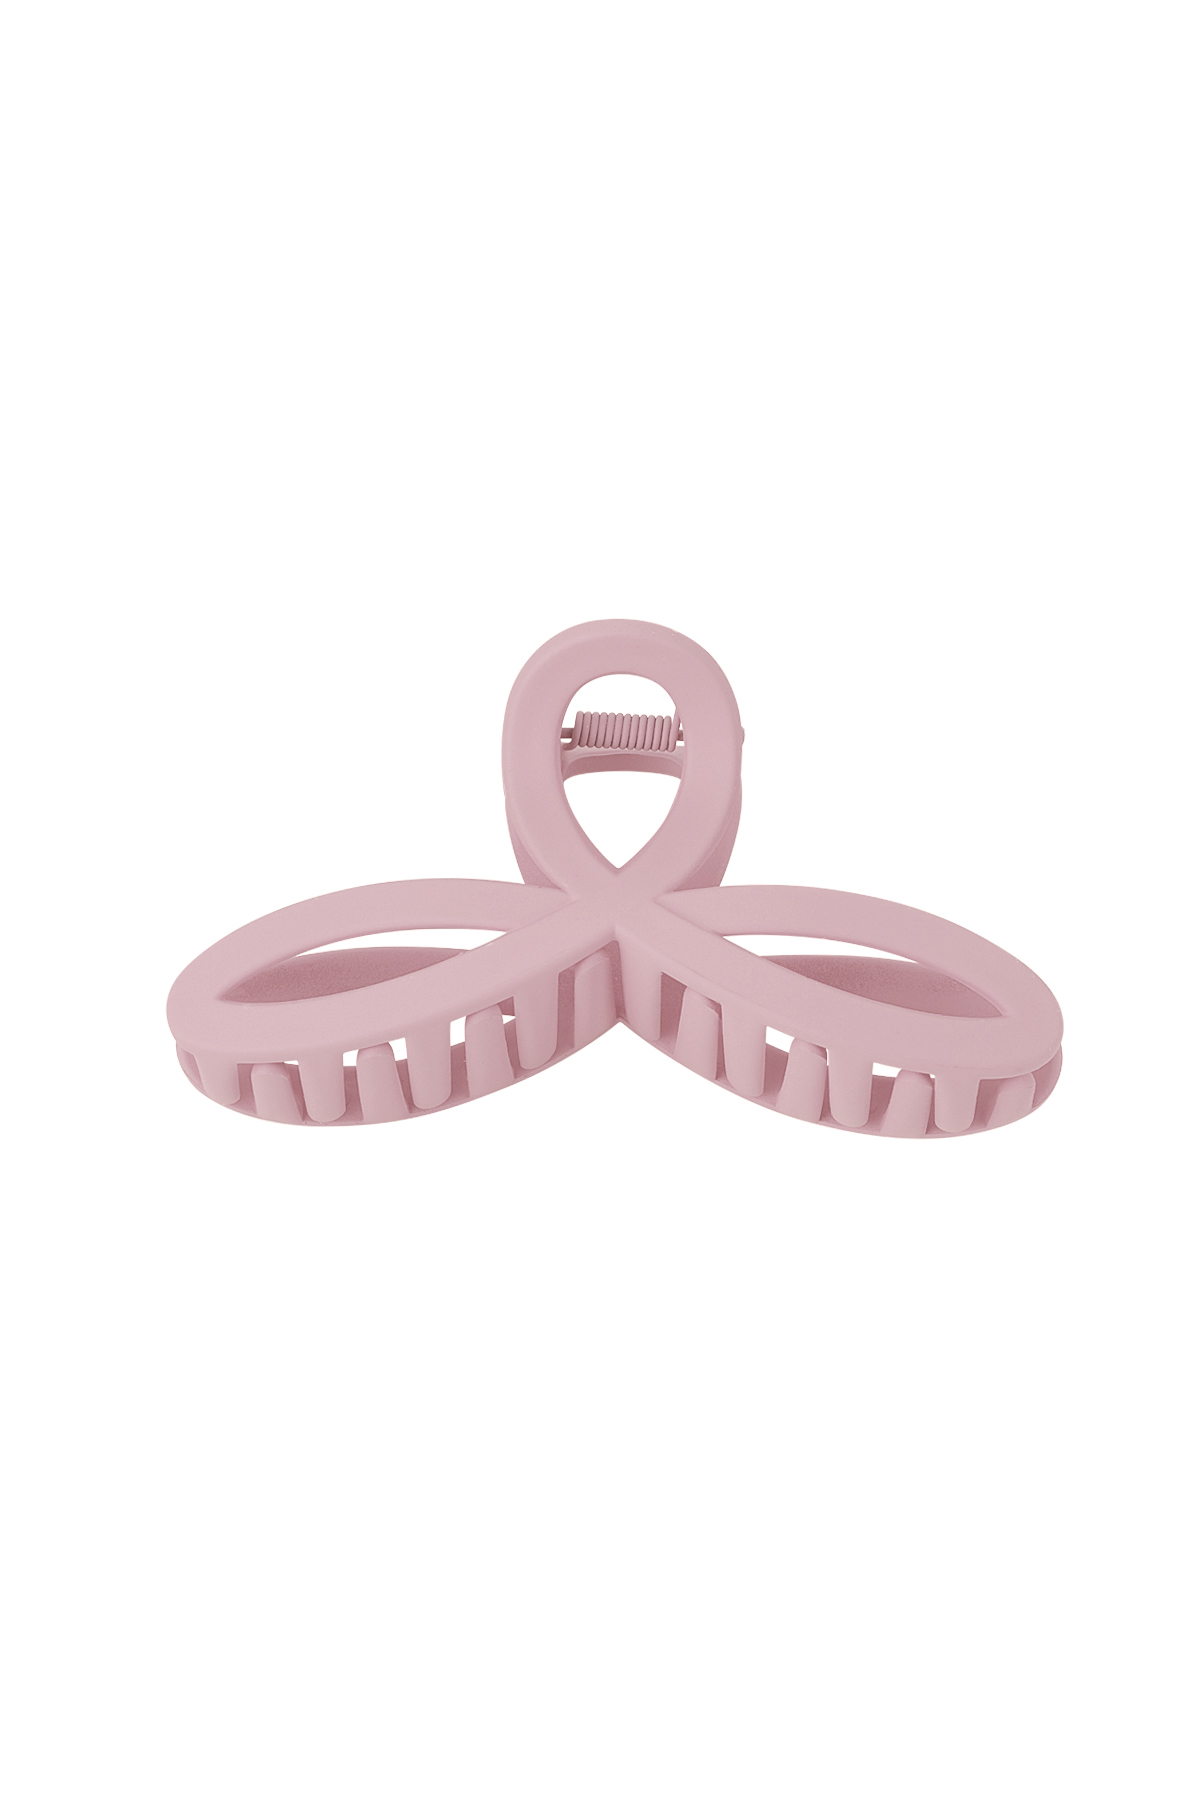 Hair clip cheerful - pastel pink Plastic 